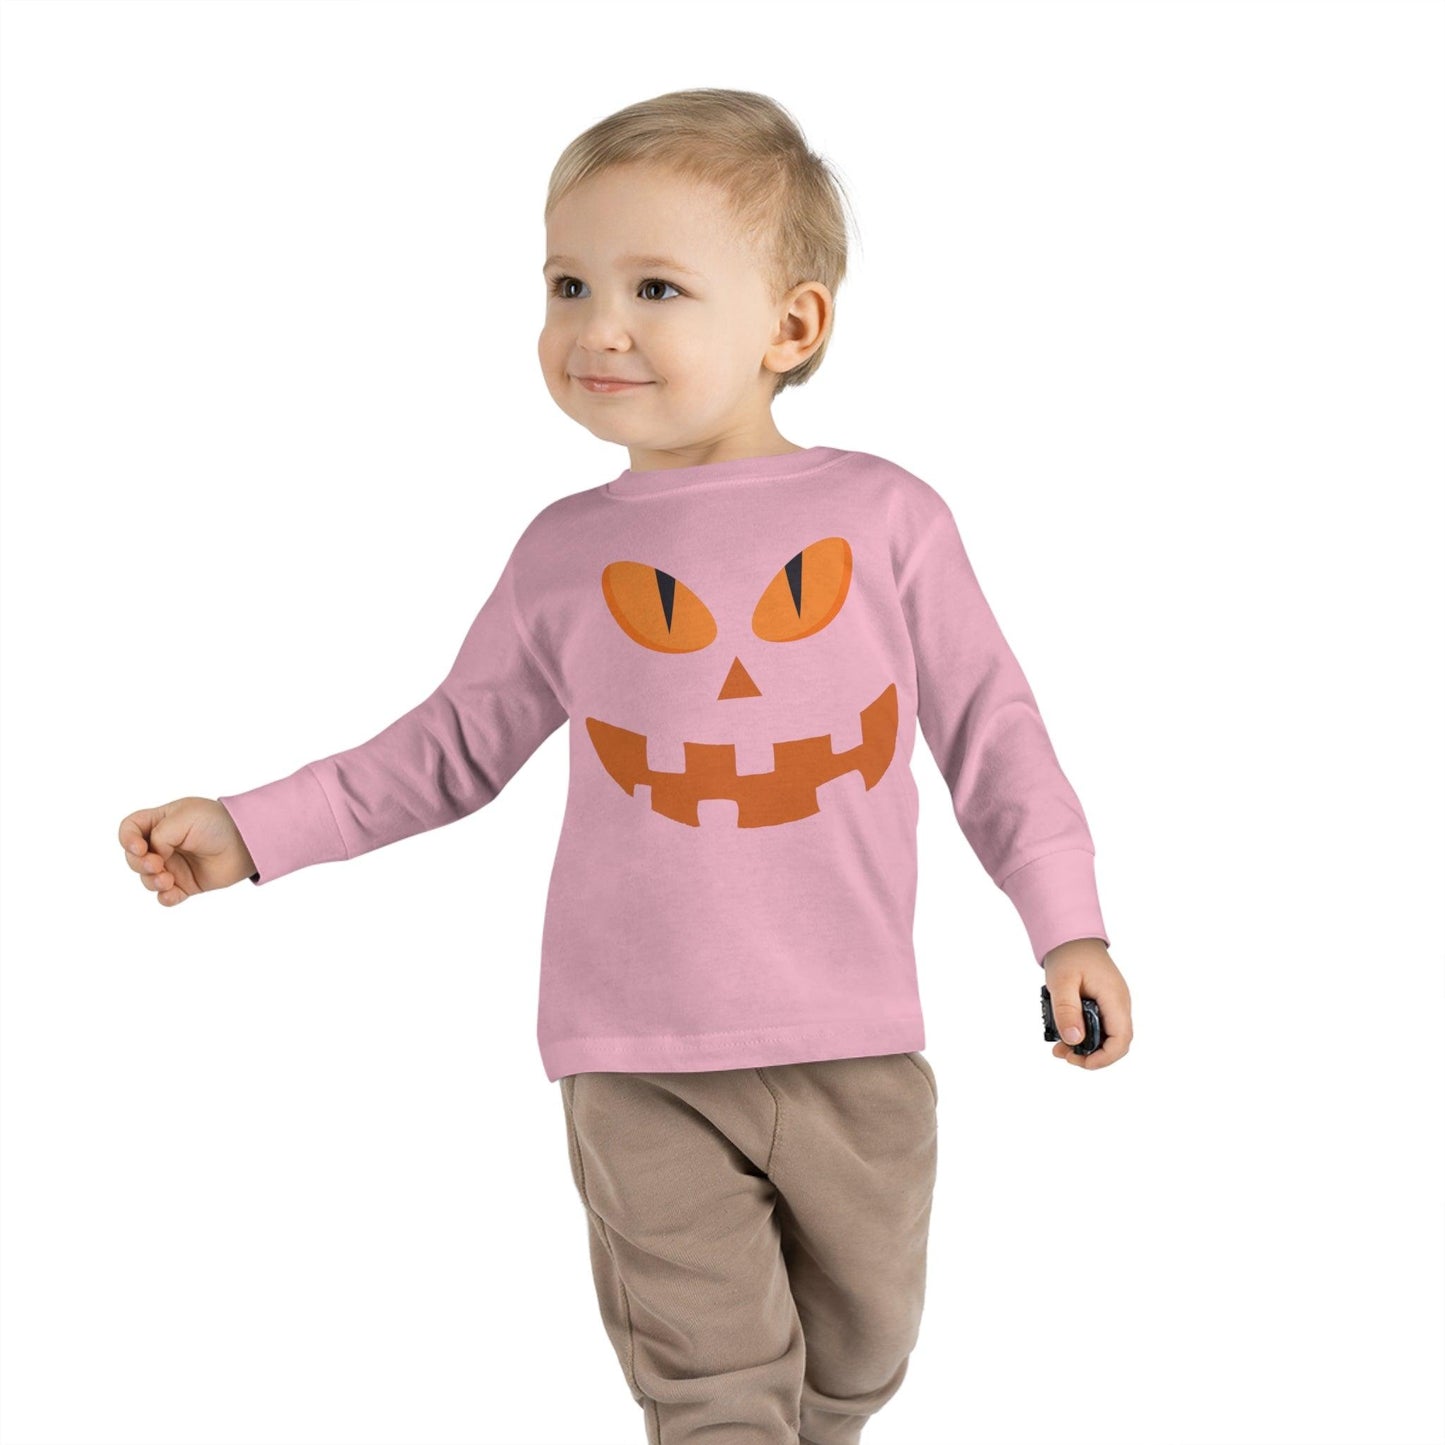 Kids Jack O Lantern Shirt Kids Halloween Pumpkin Face Shirt Kids Halloween Shirt Kids Long Sleeve Trick or Treat Outfit for Halloween - Giftsmojo